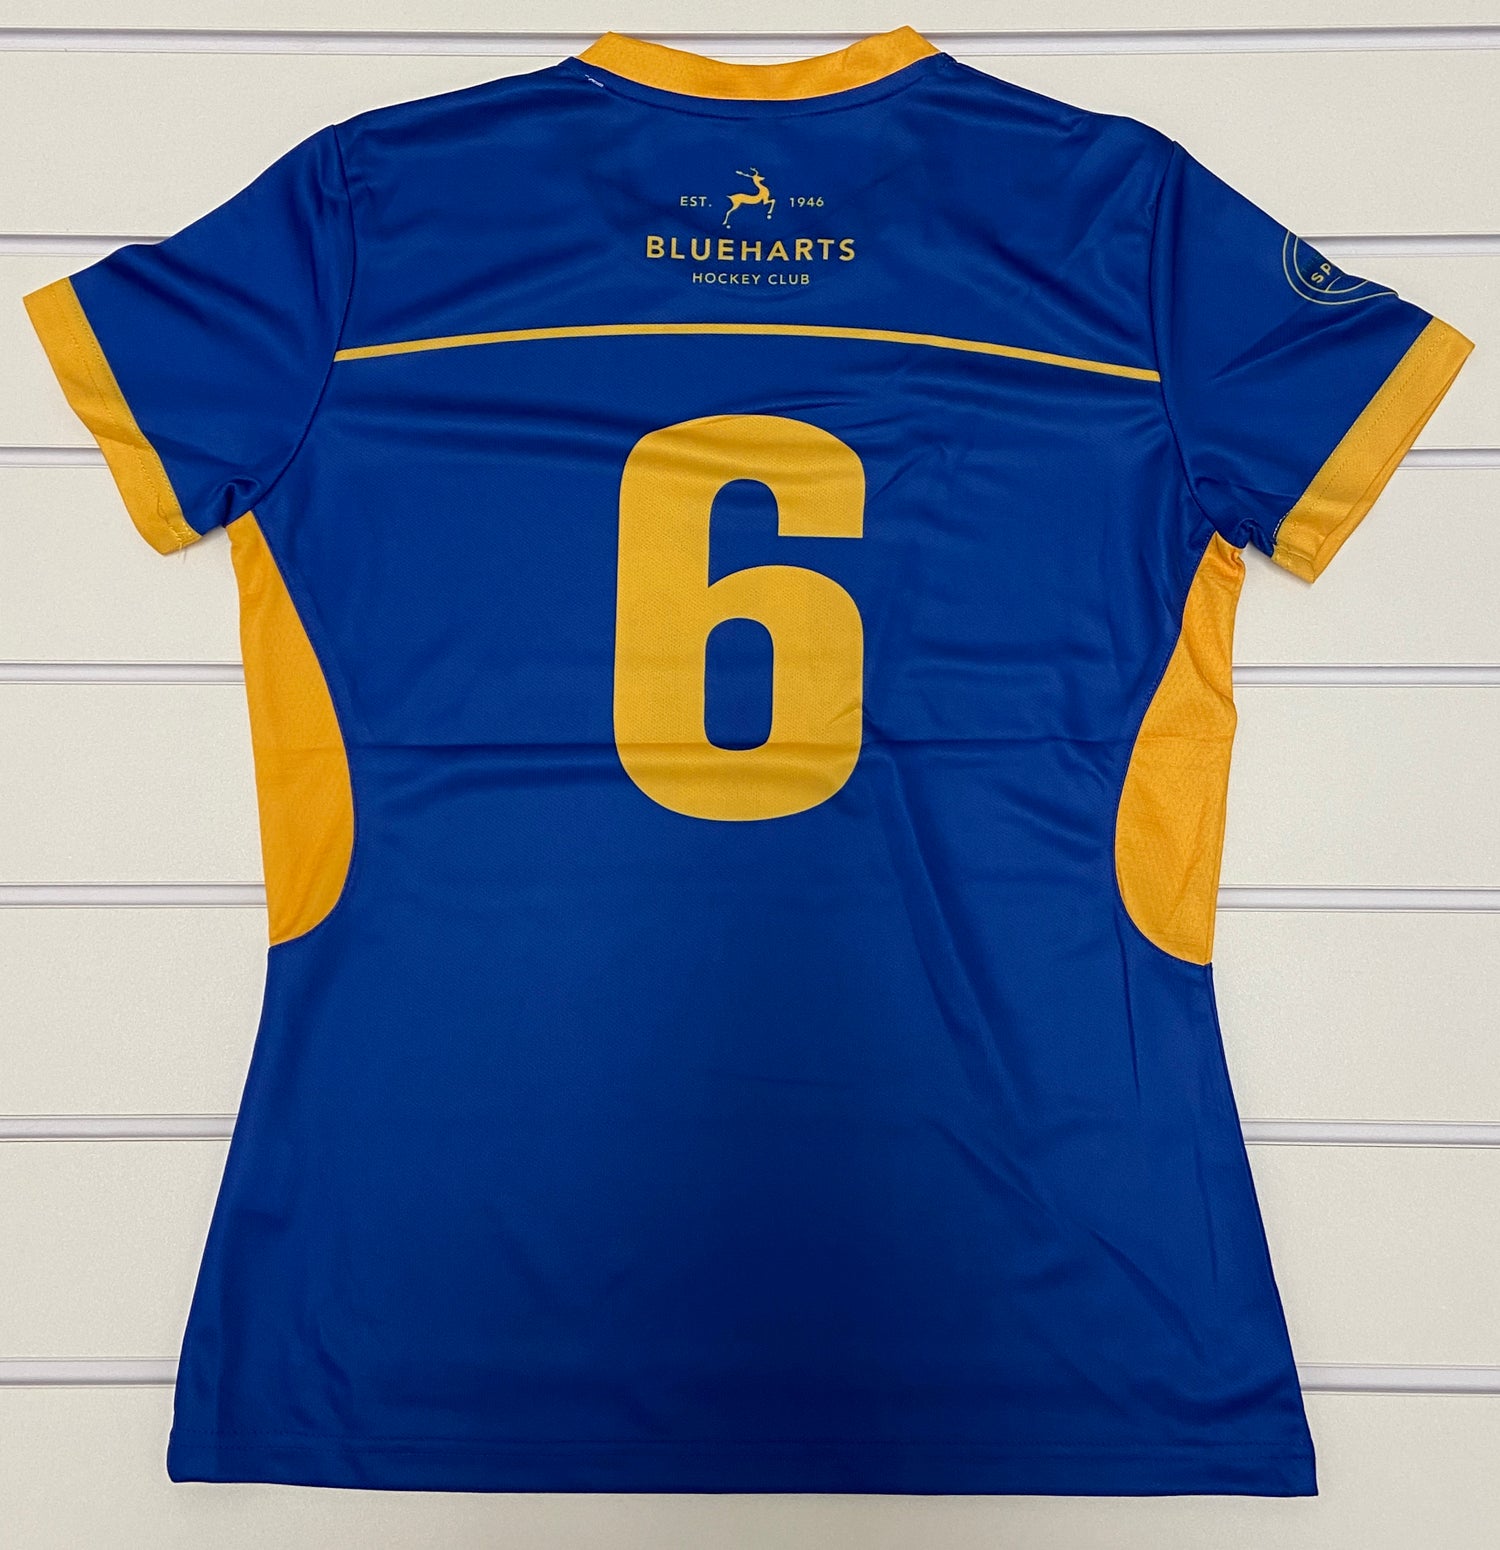 Blueharts Women's Home Playing Shirt (Small, size 10-12)